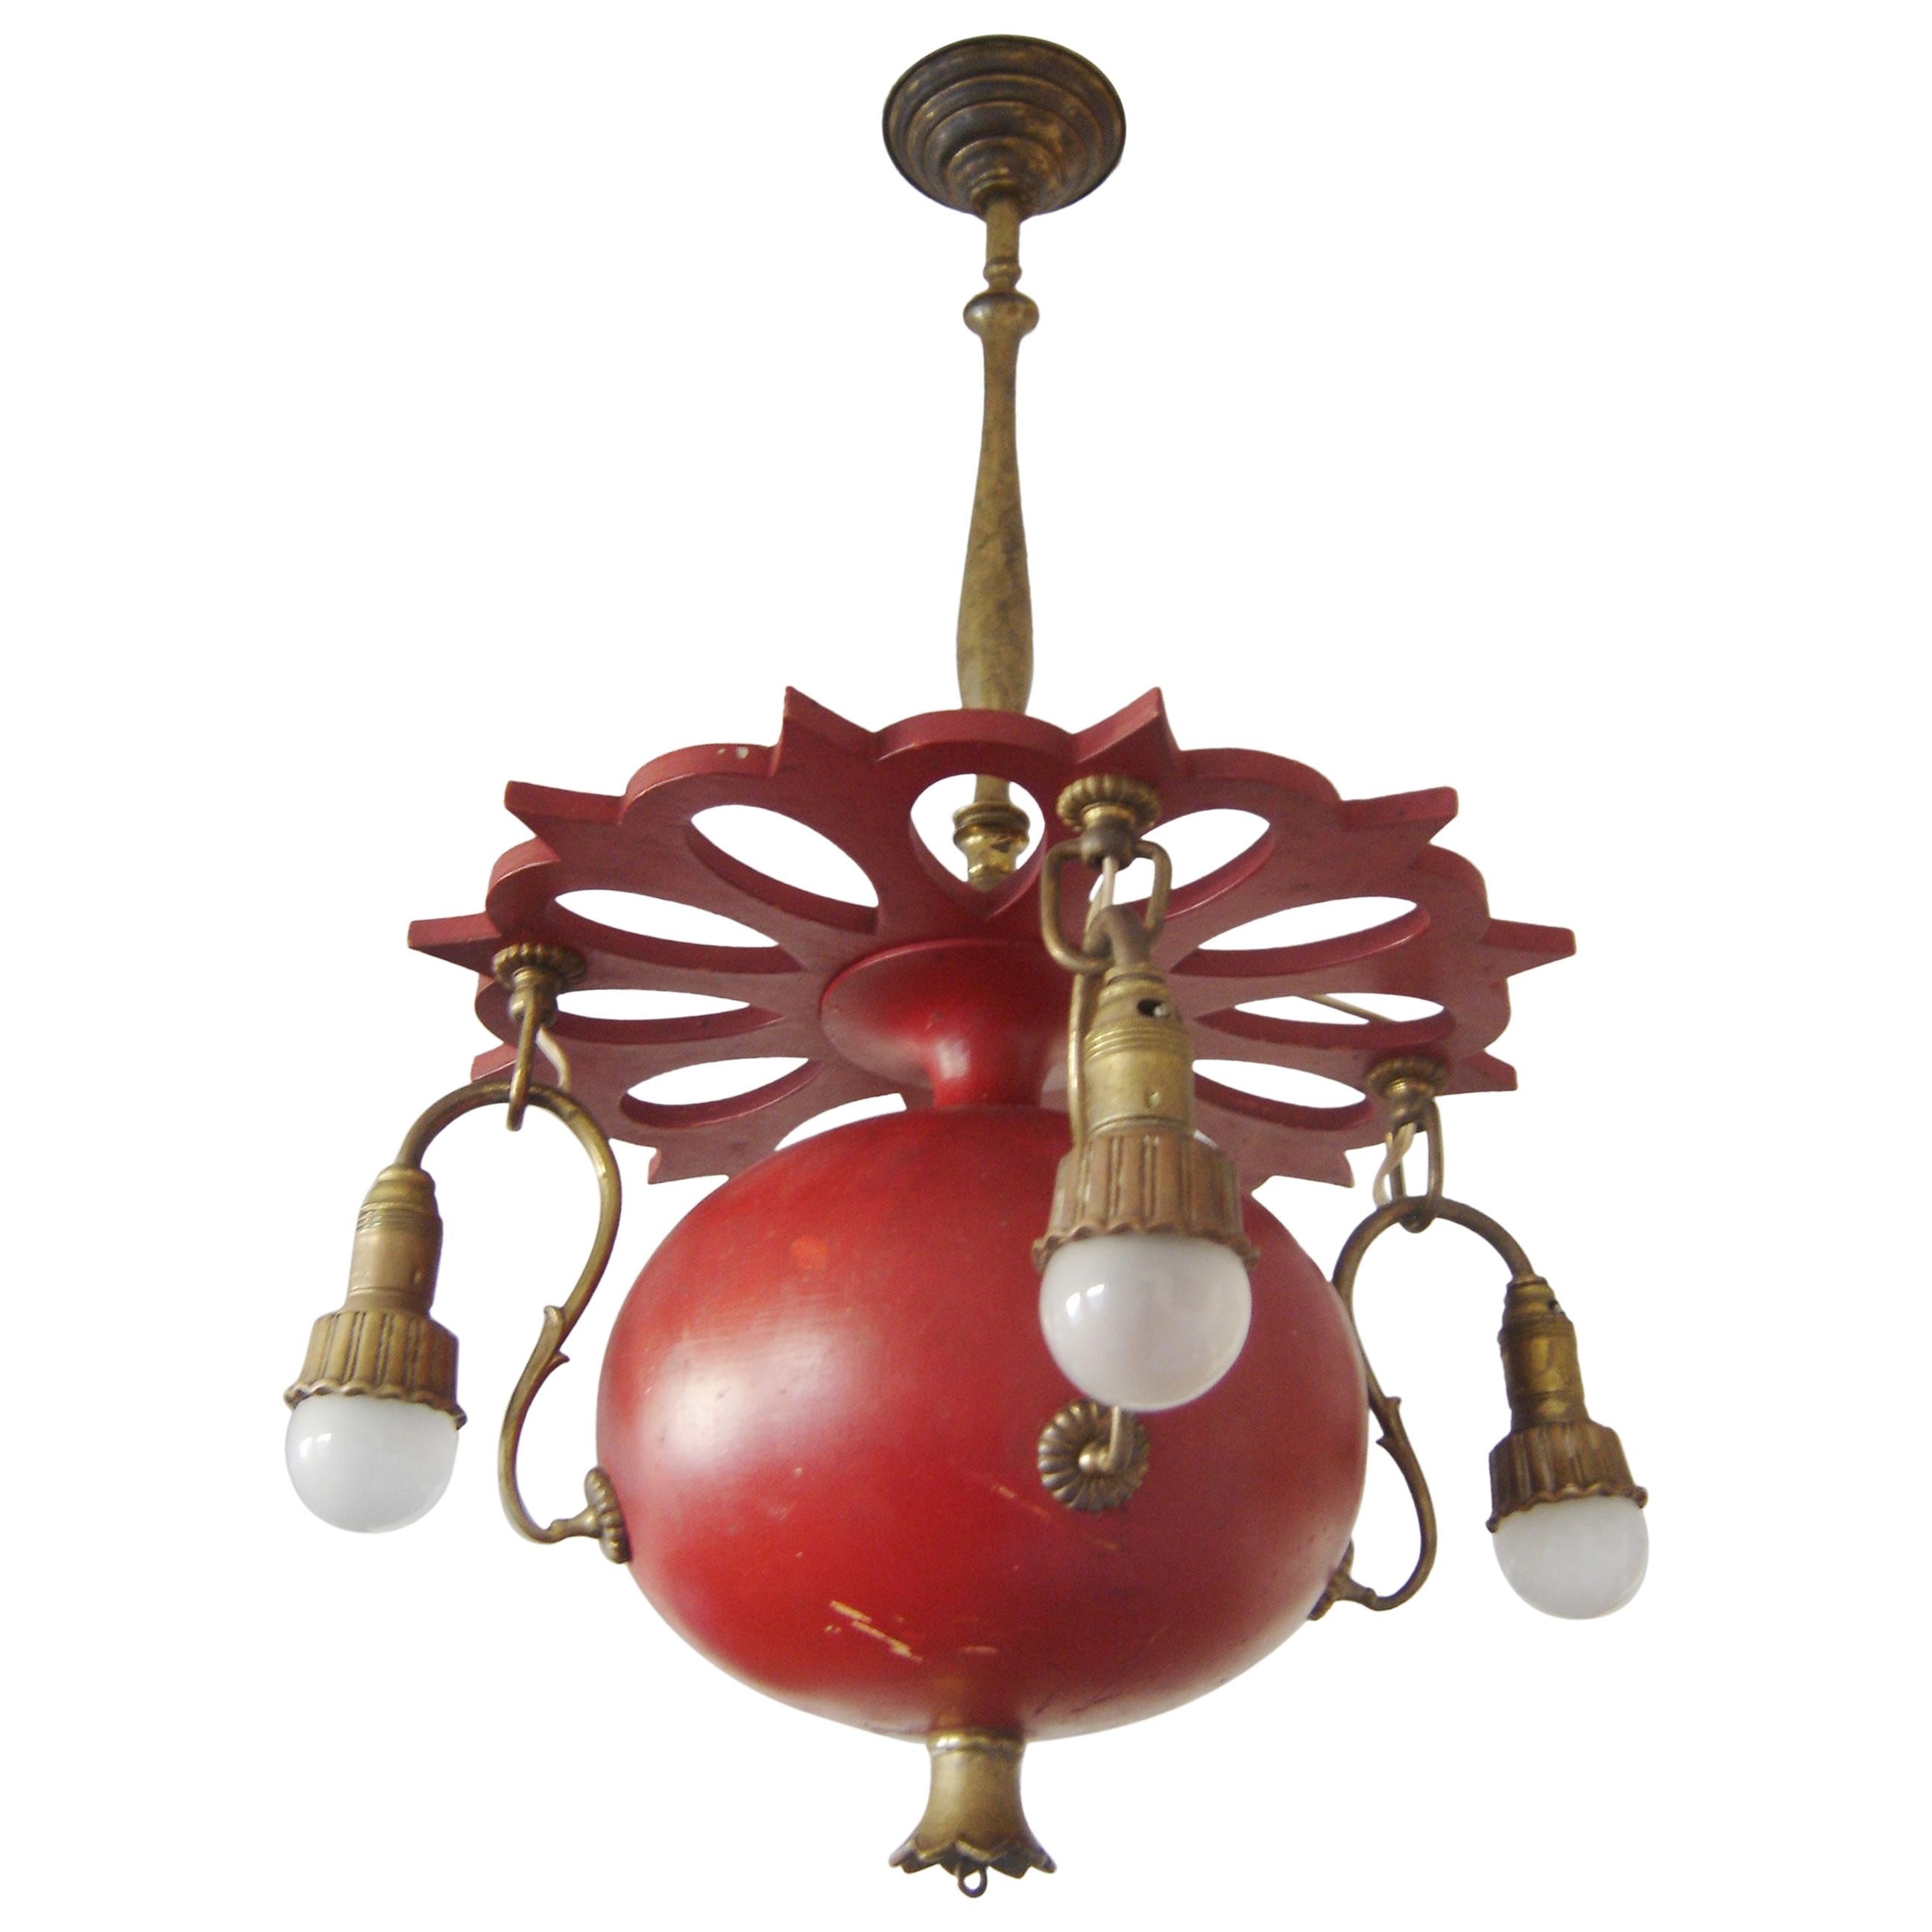 Exceptional Art Nouveau Chandelier or Pendant Lamp 'Granate Apple', 1900 Germany For Sale